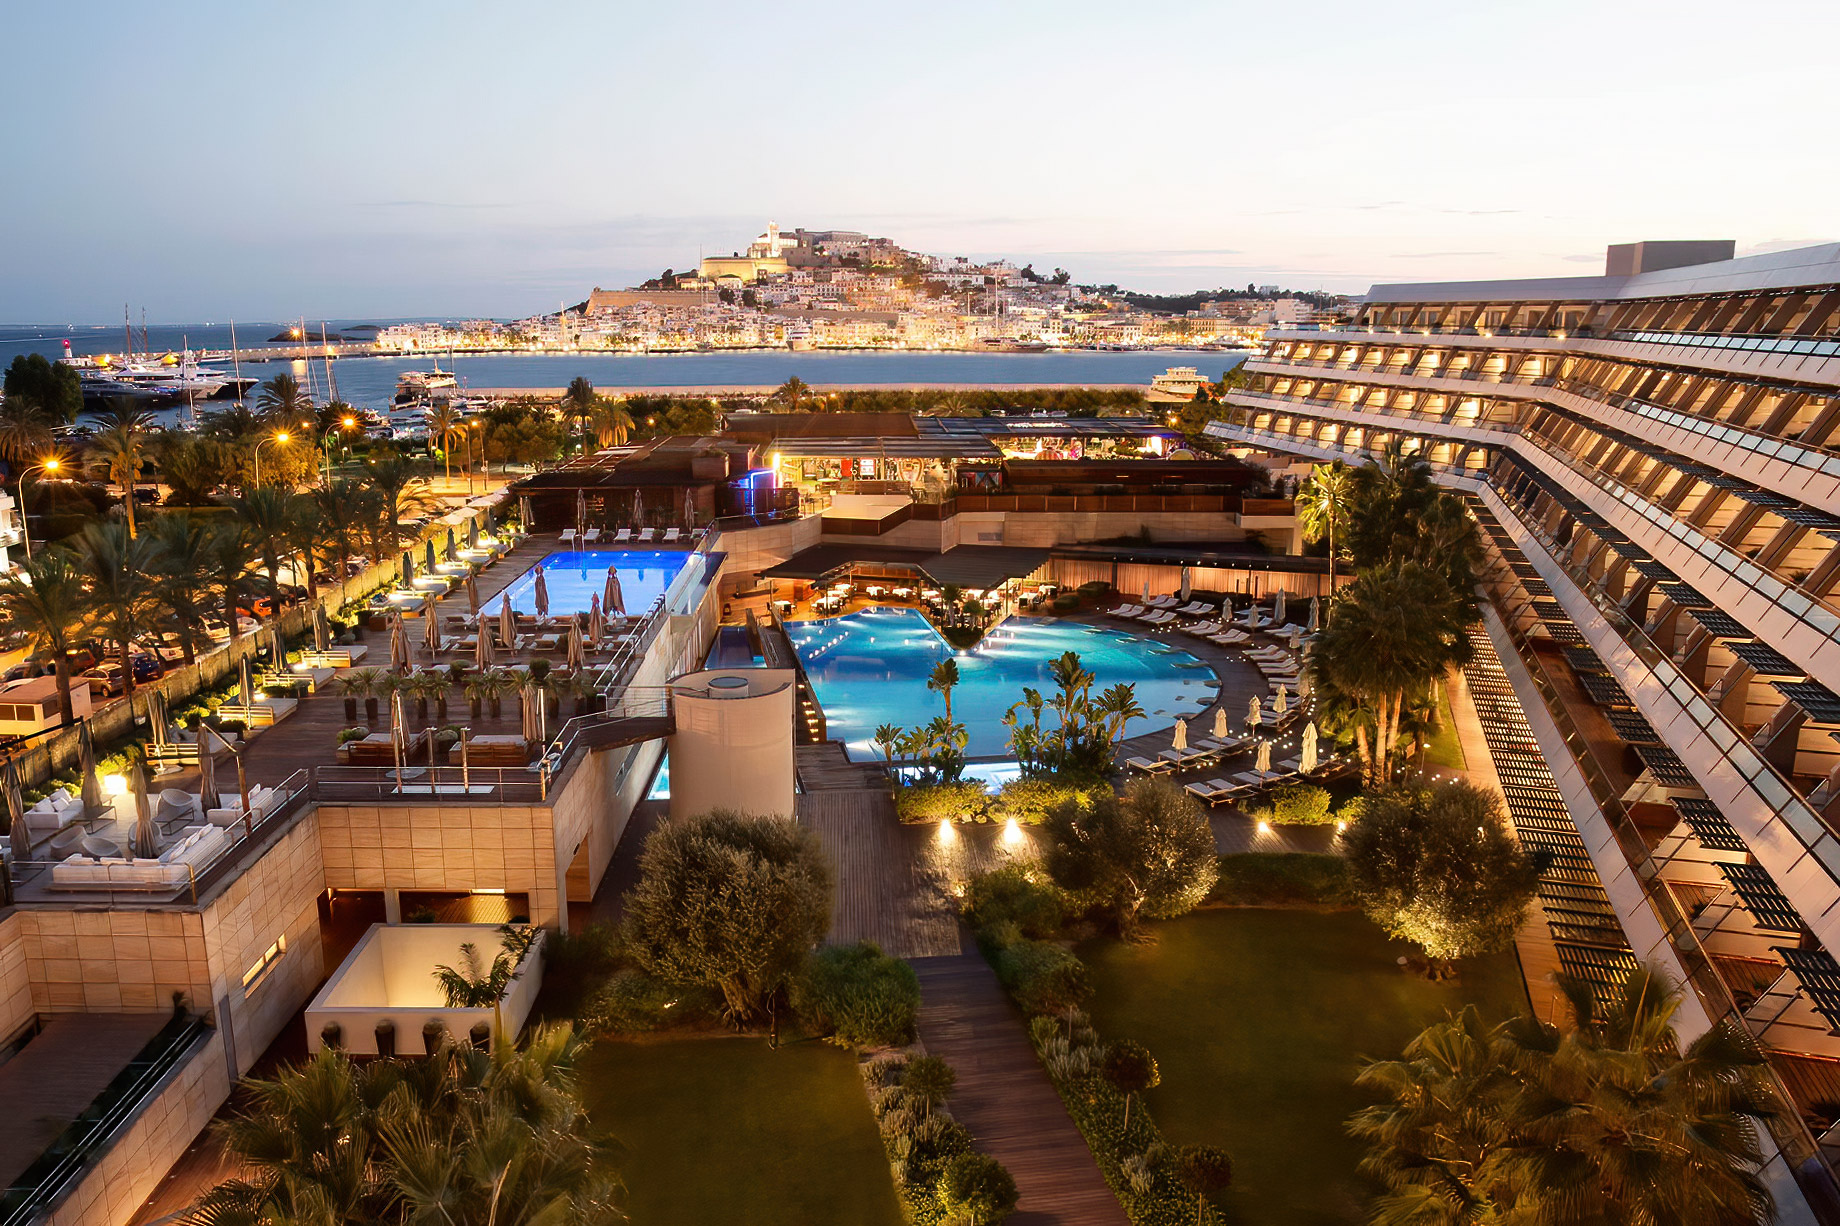 Ibiza Gran Hotel Casino – Balearic Islands, Spain